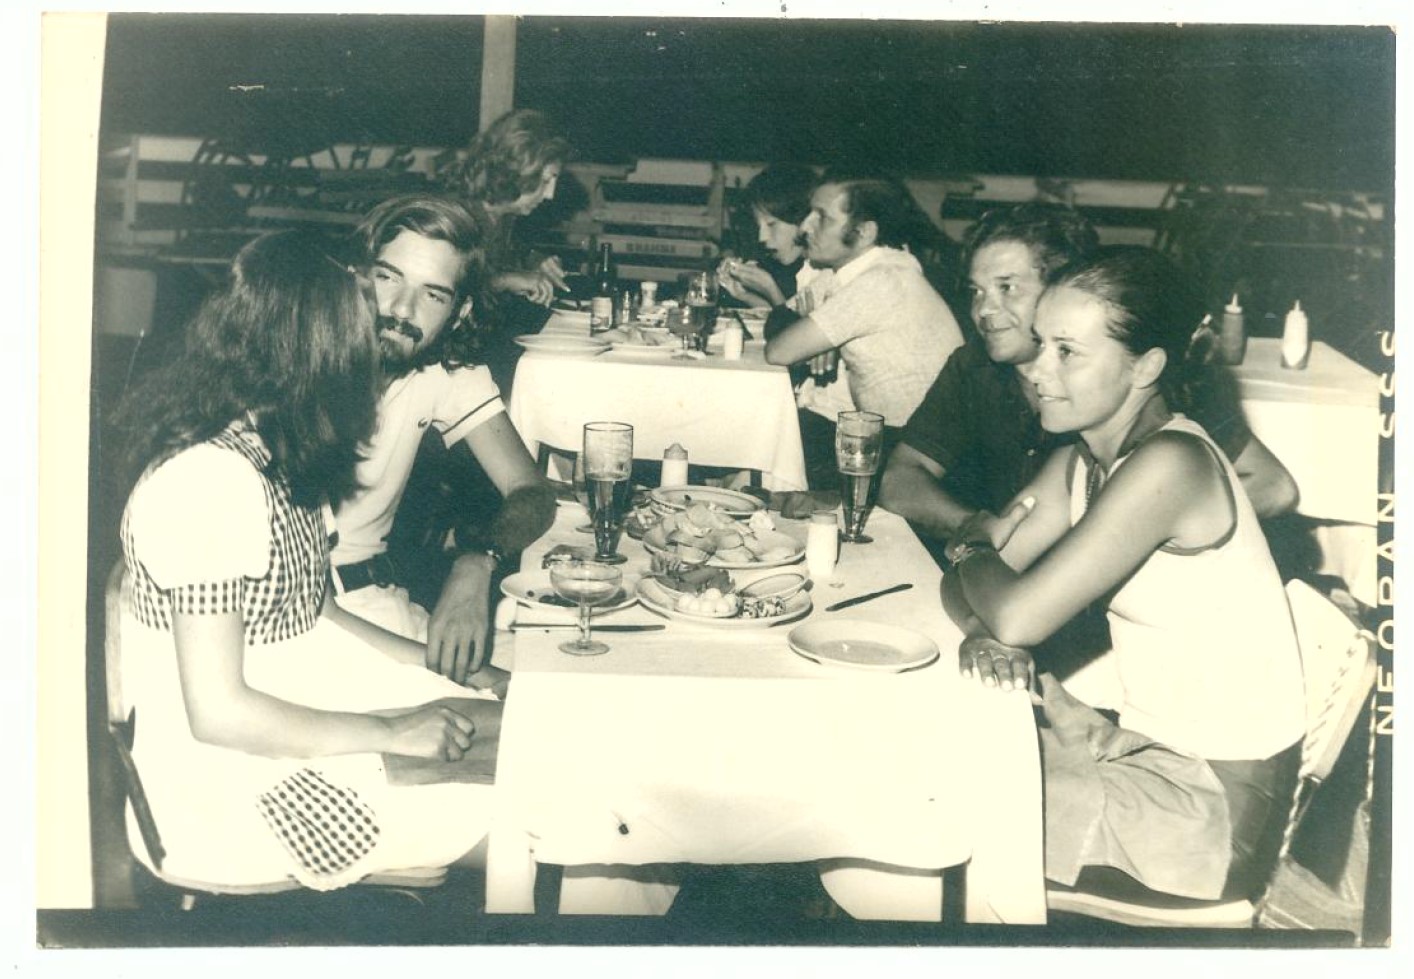 Luiz Carlos Brant, Nadia Werneck, Kanoyo Taizo Werneck (irmo da Nadia) e Jen-Lei Werneck em Fevereiro de 1973 no restaurante Ilha dos Pescadores, barra da tijuca, Rio de Janeiro